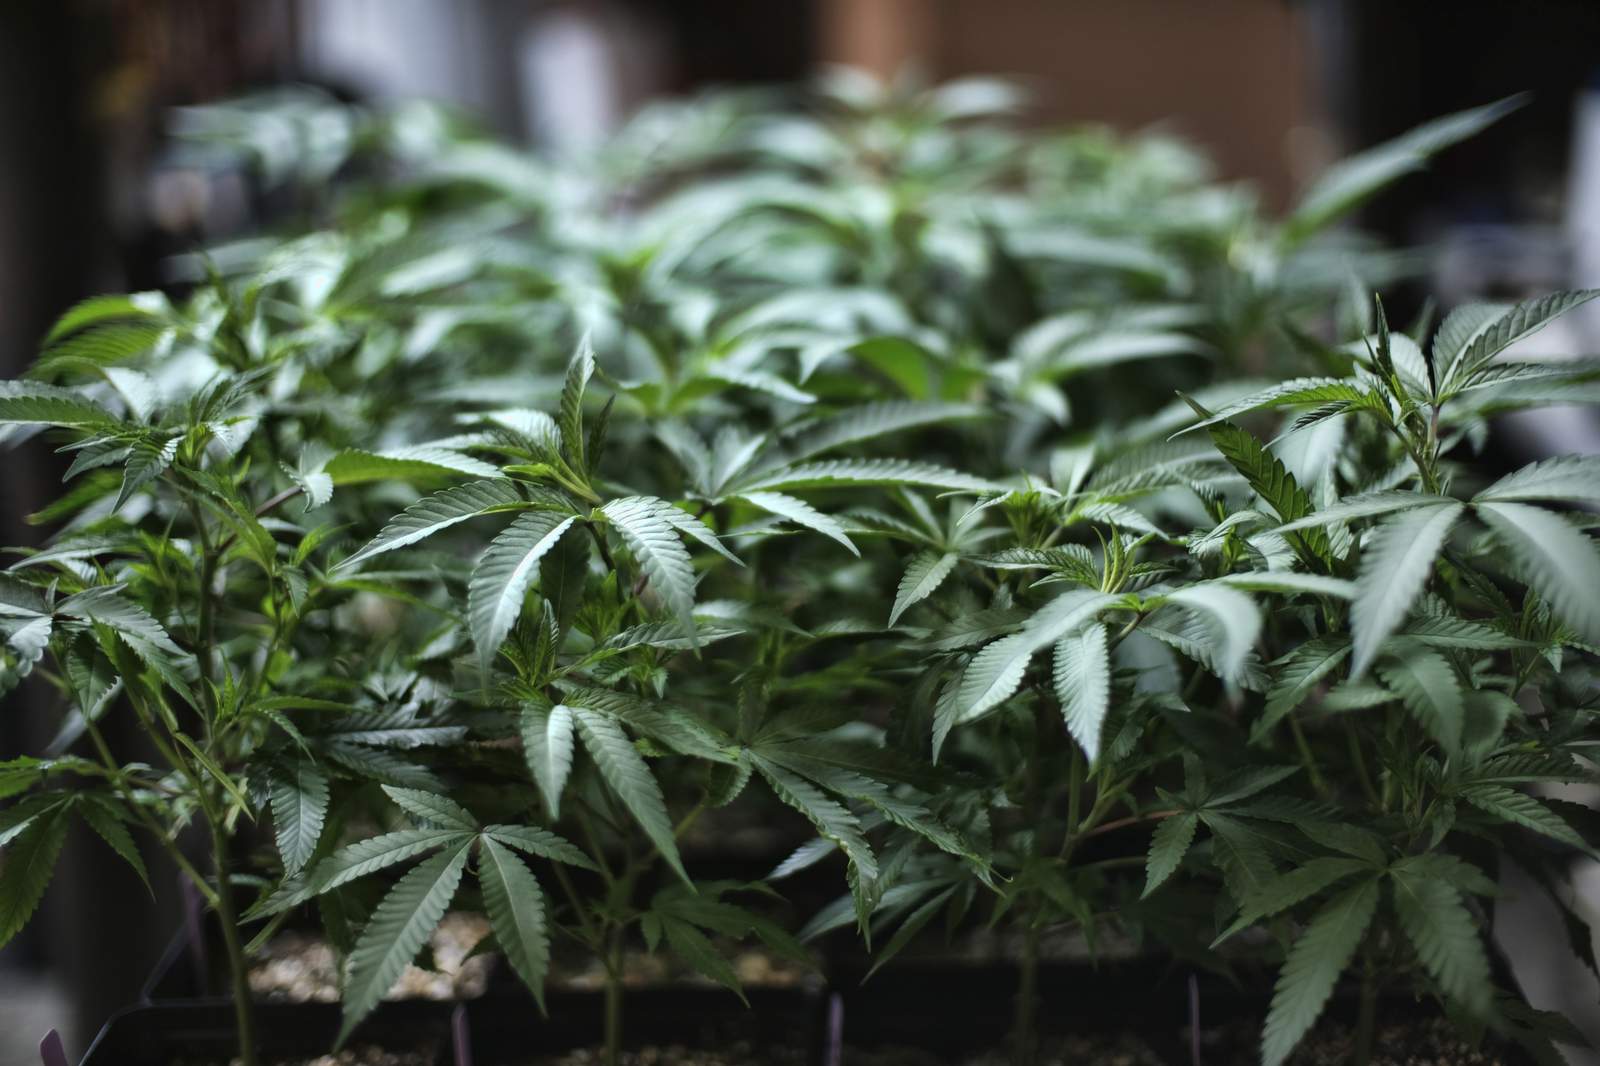 New York is latest state to legalize recreational marijuana